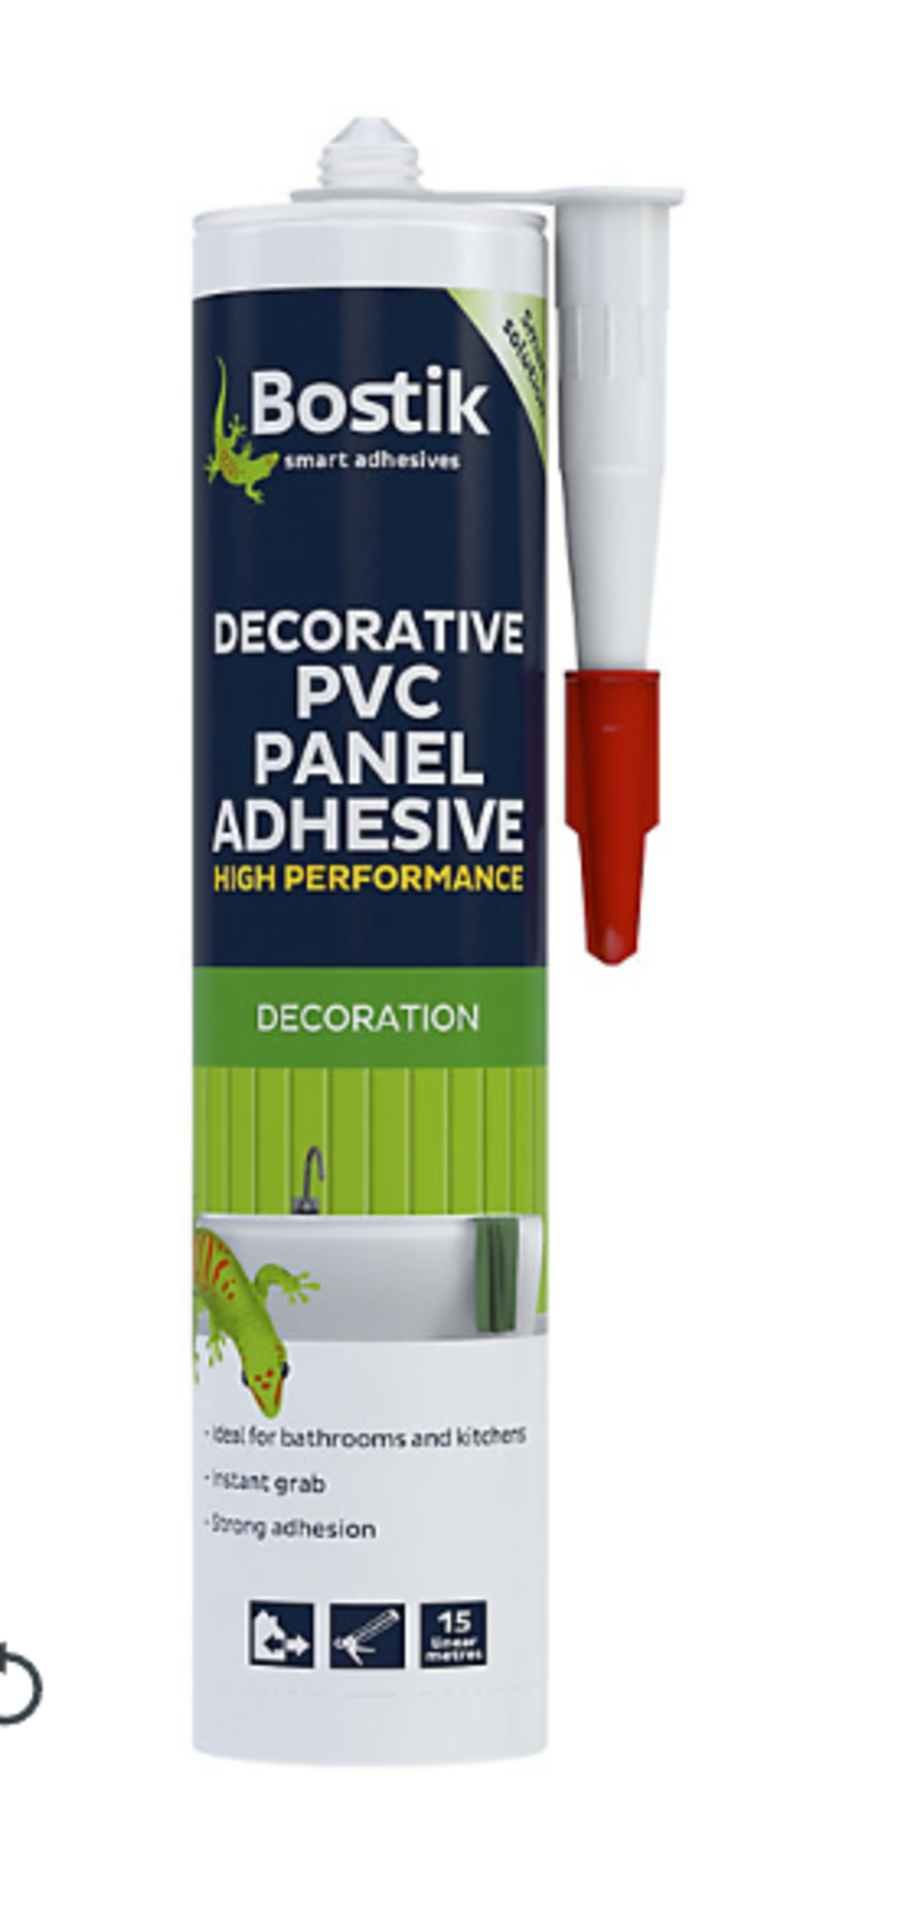 72 X BRAND NEW BOSTIK DECORATIVE PVC PANEL ADHESIVE HIGH PERFORMANCE ADHESIVE 290ML EXPIRY 27/01/23